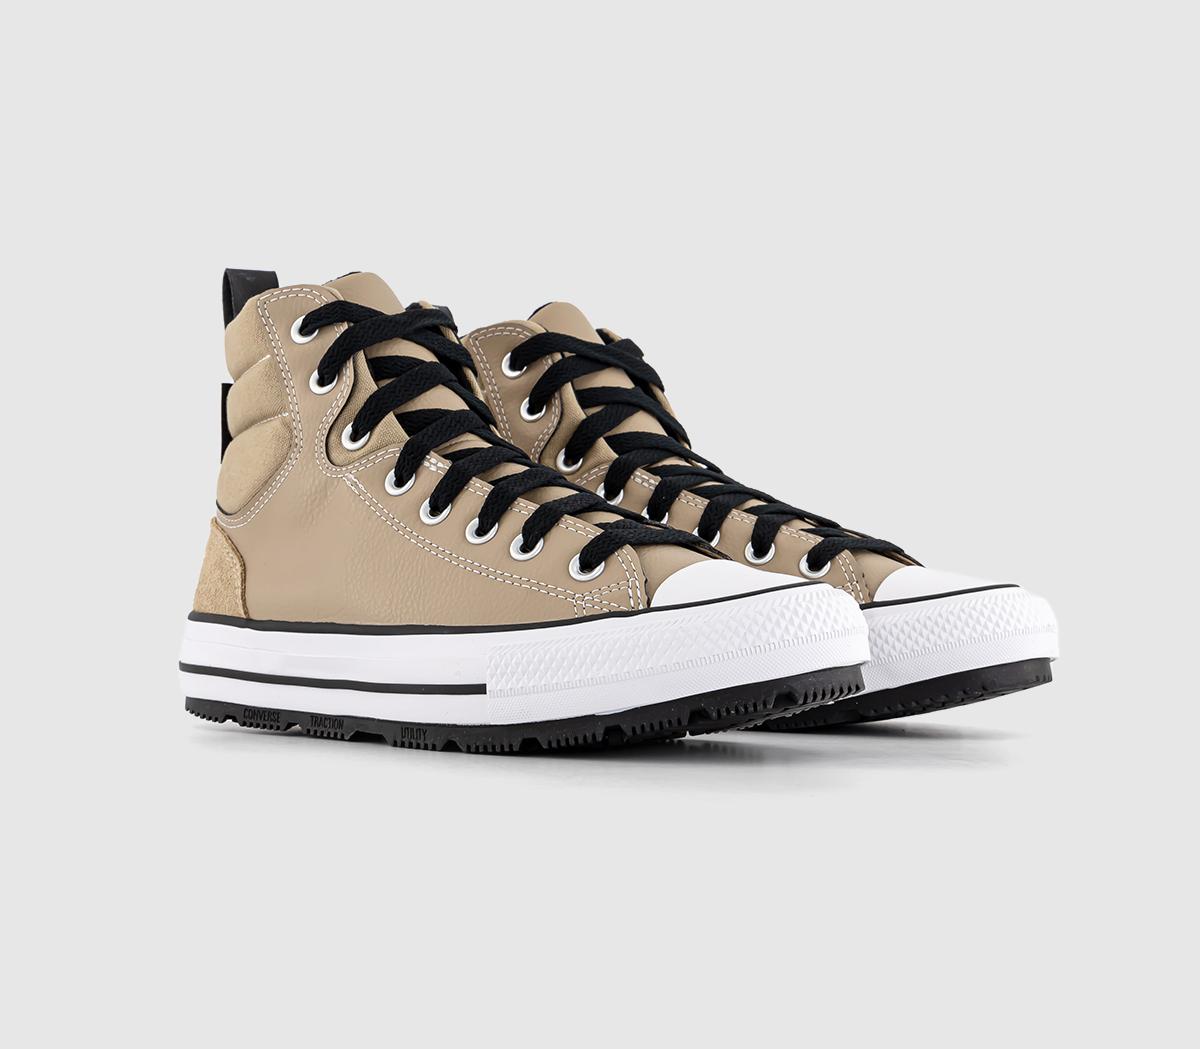 Converse All Star Berkshire Sneaker Boots Nomad Khaki Black White Green, 8.5